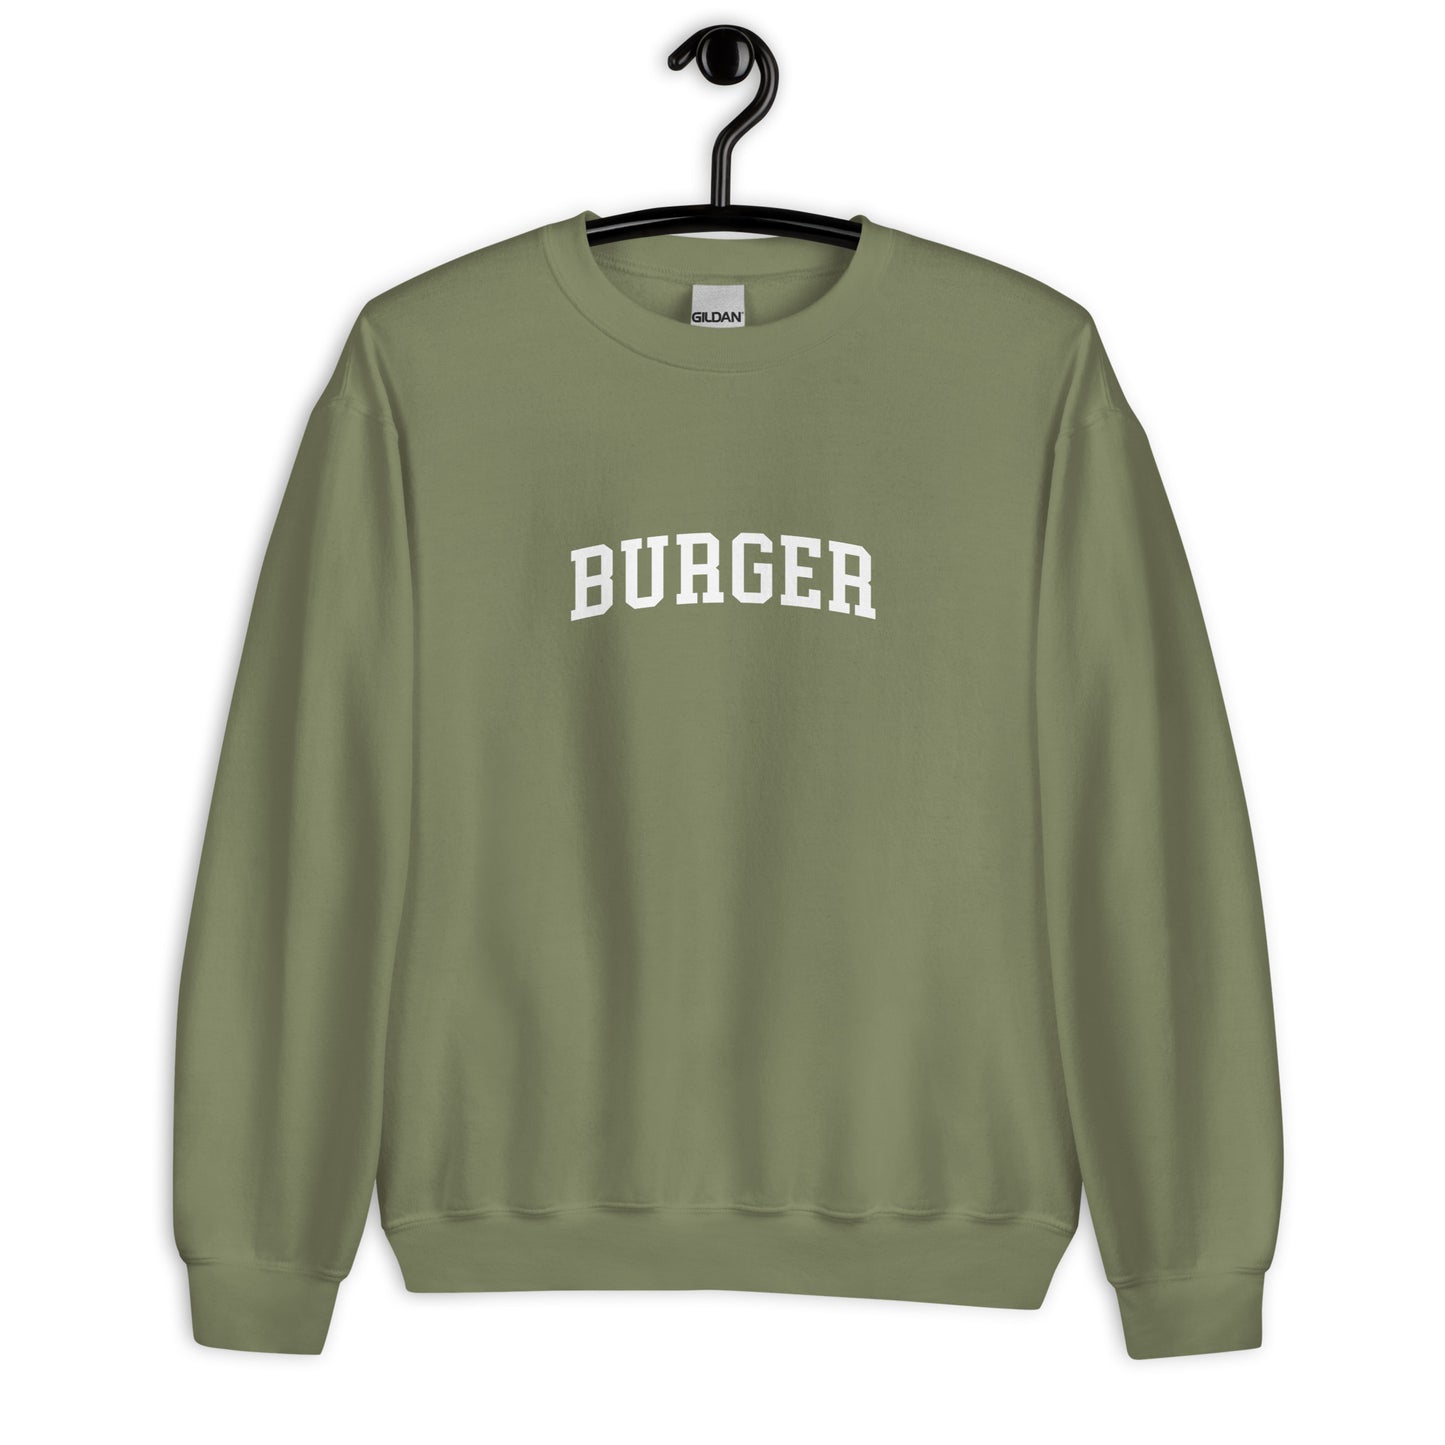 Burger Sweatshirt - Arched Font